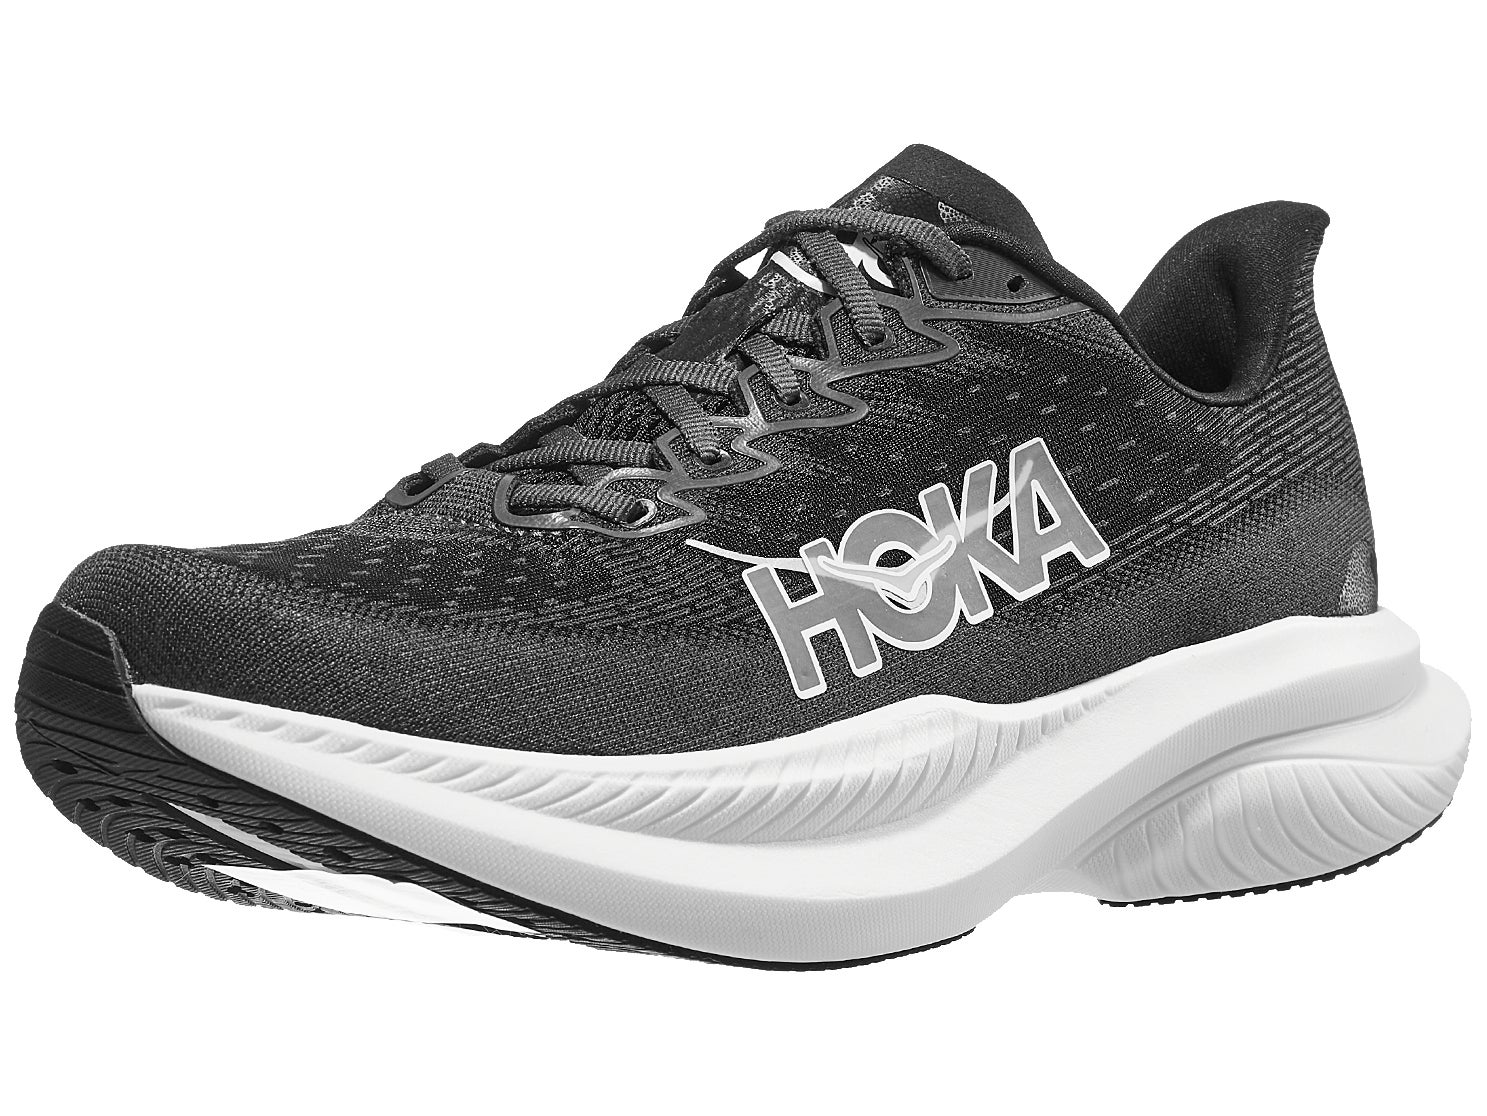 Hoka Men's & Women's Mach 6 Running Shoes (various colors) $119 + Free Shipping